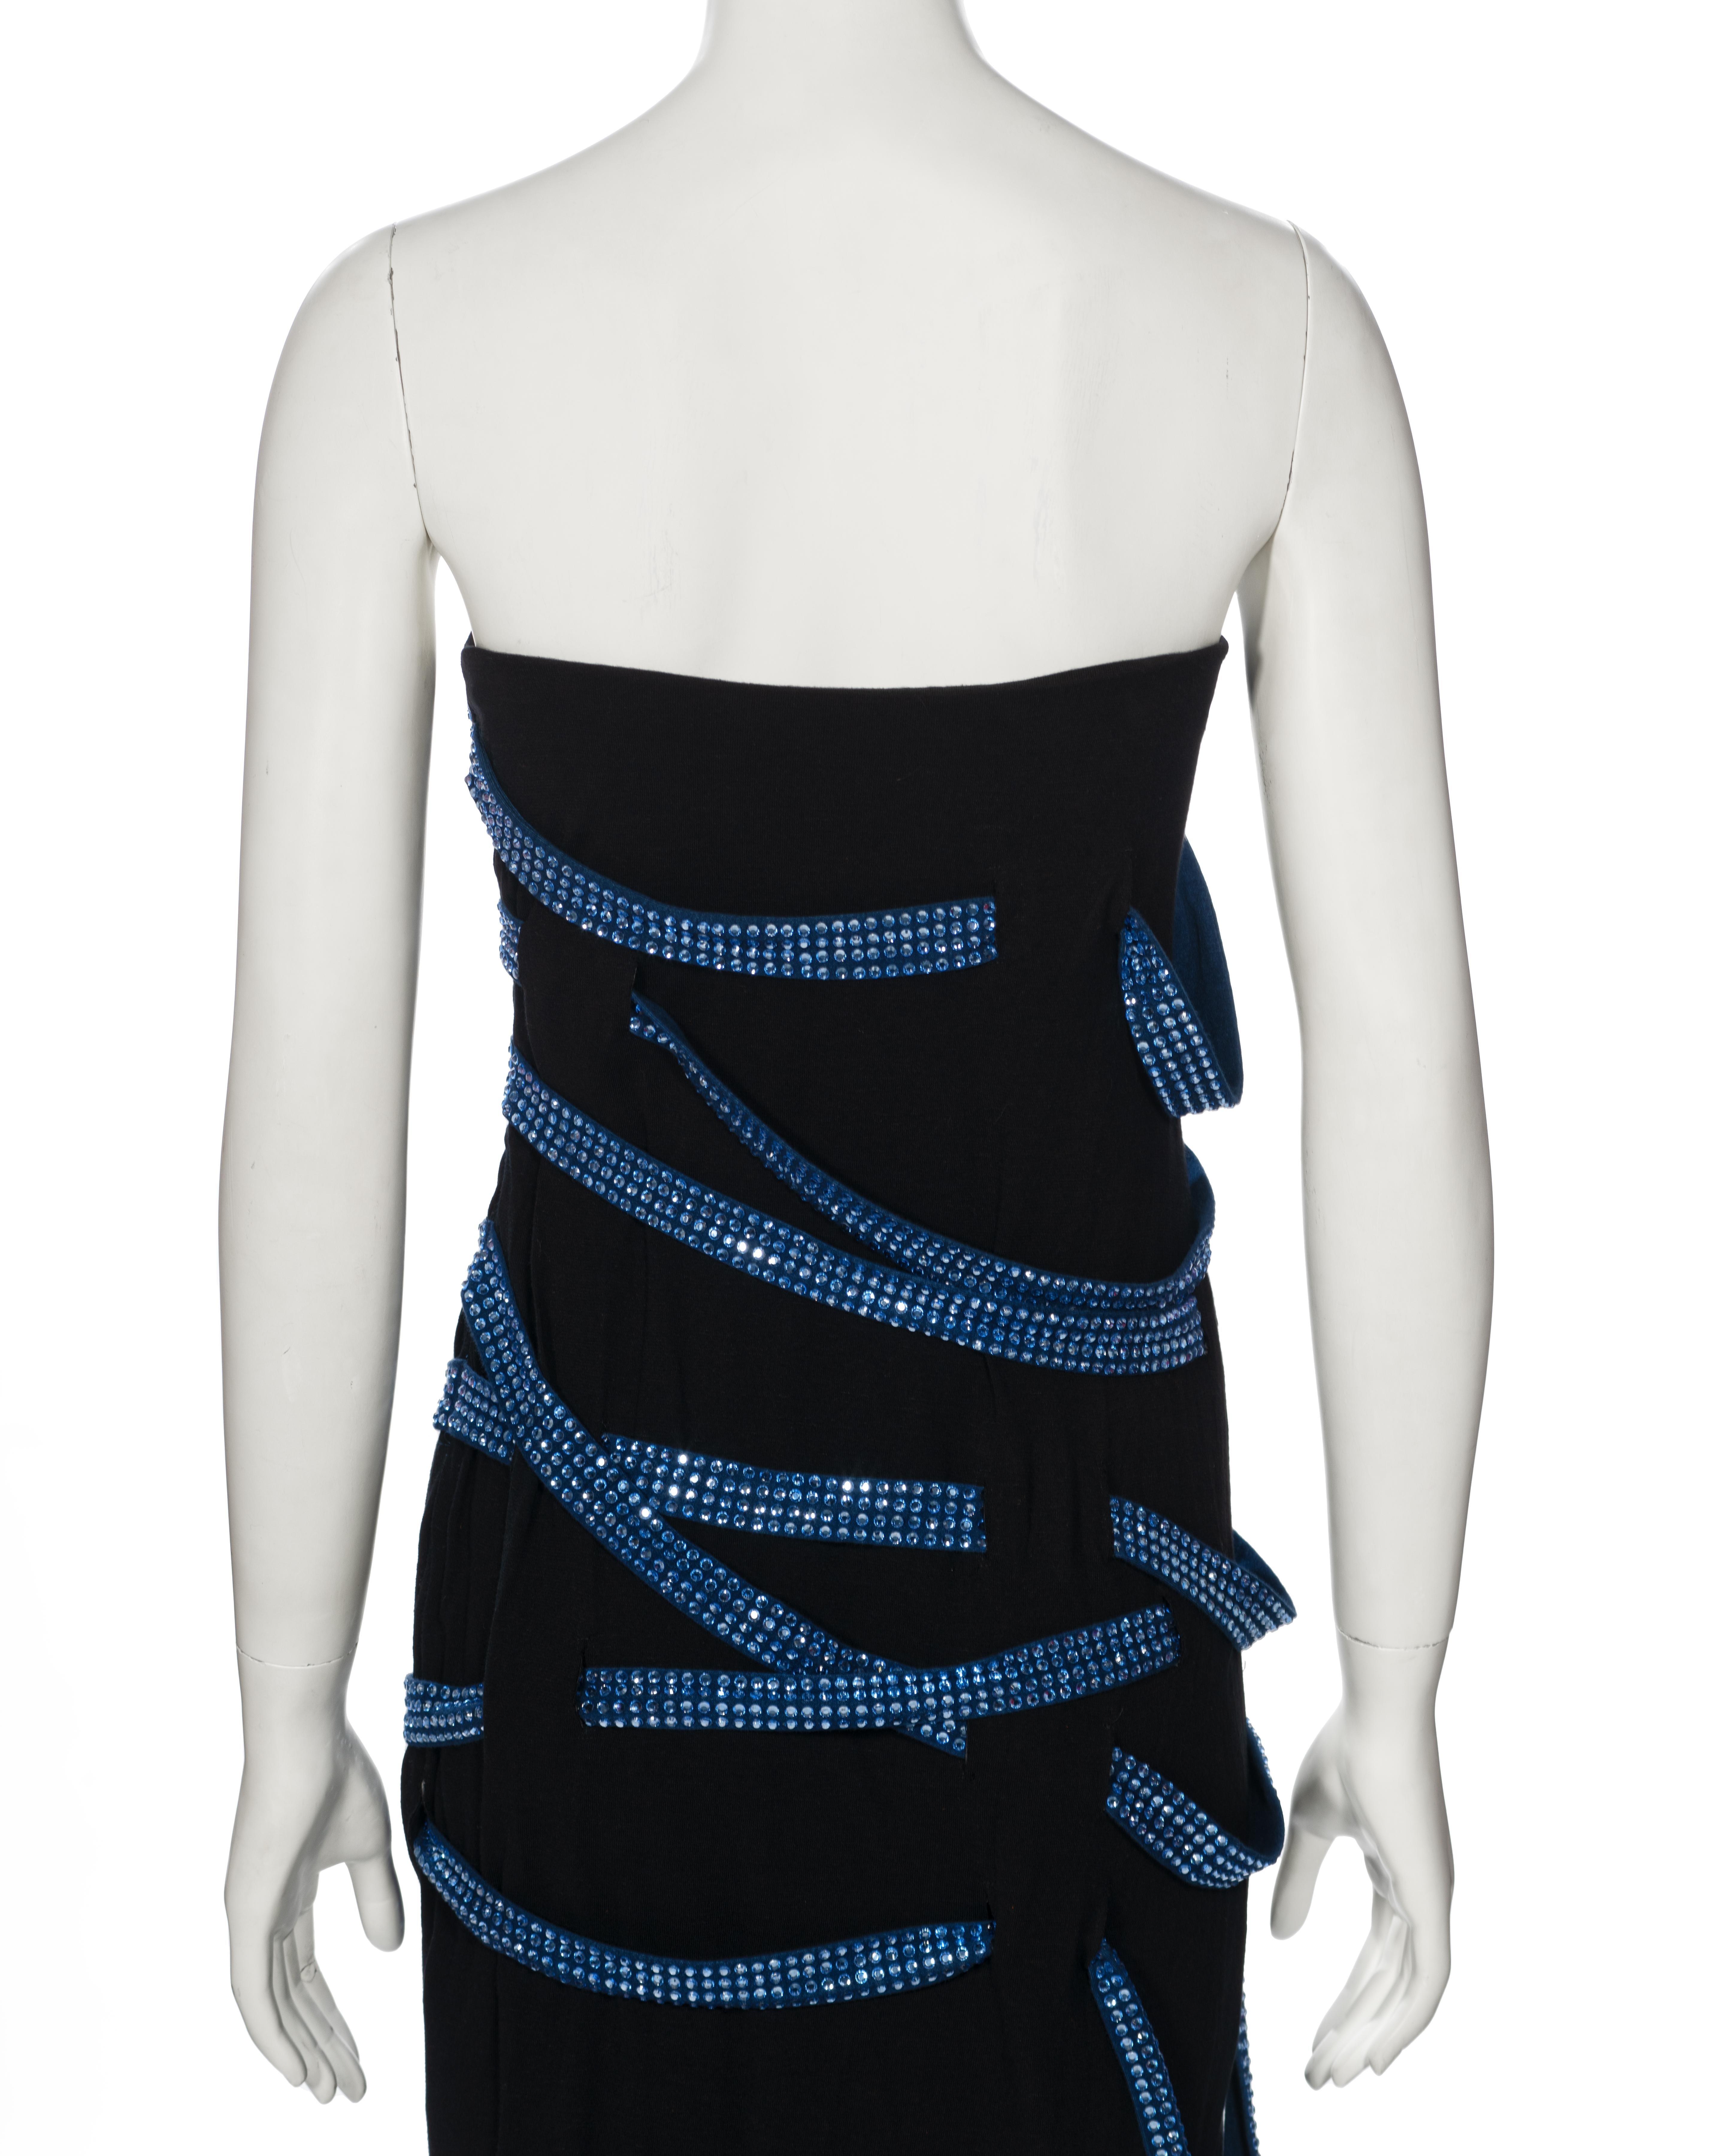 Martin Margiela Black Crystal-Laced Viscose Mini Dress, ss 2009 For Sale 7